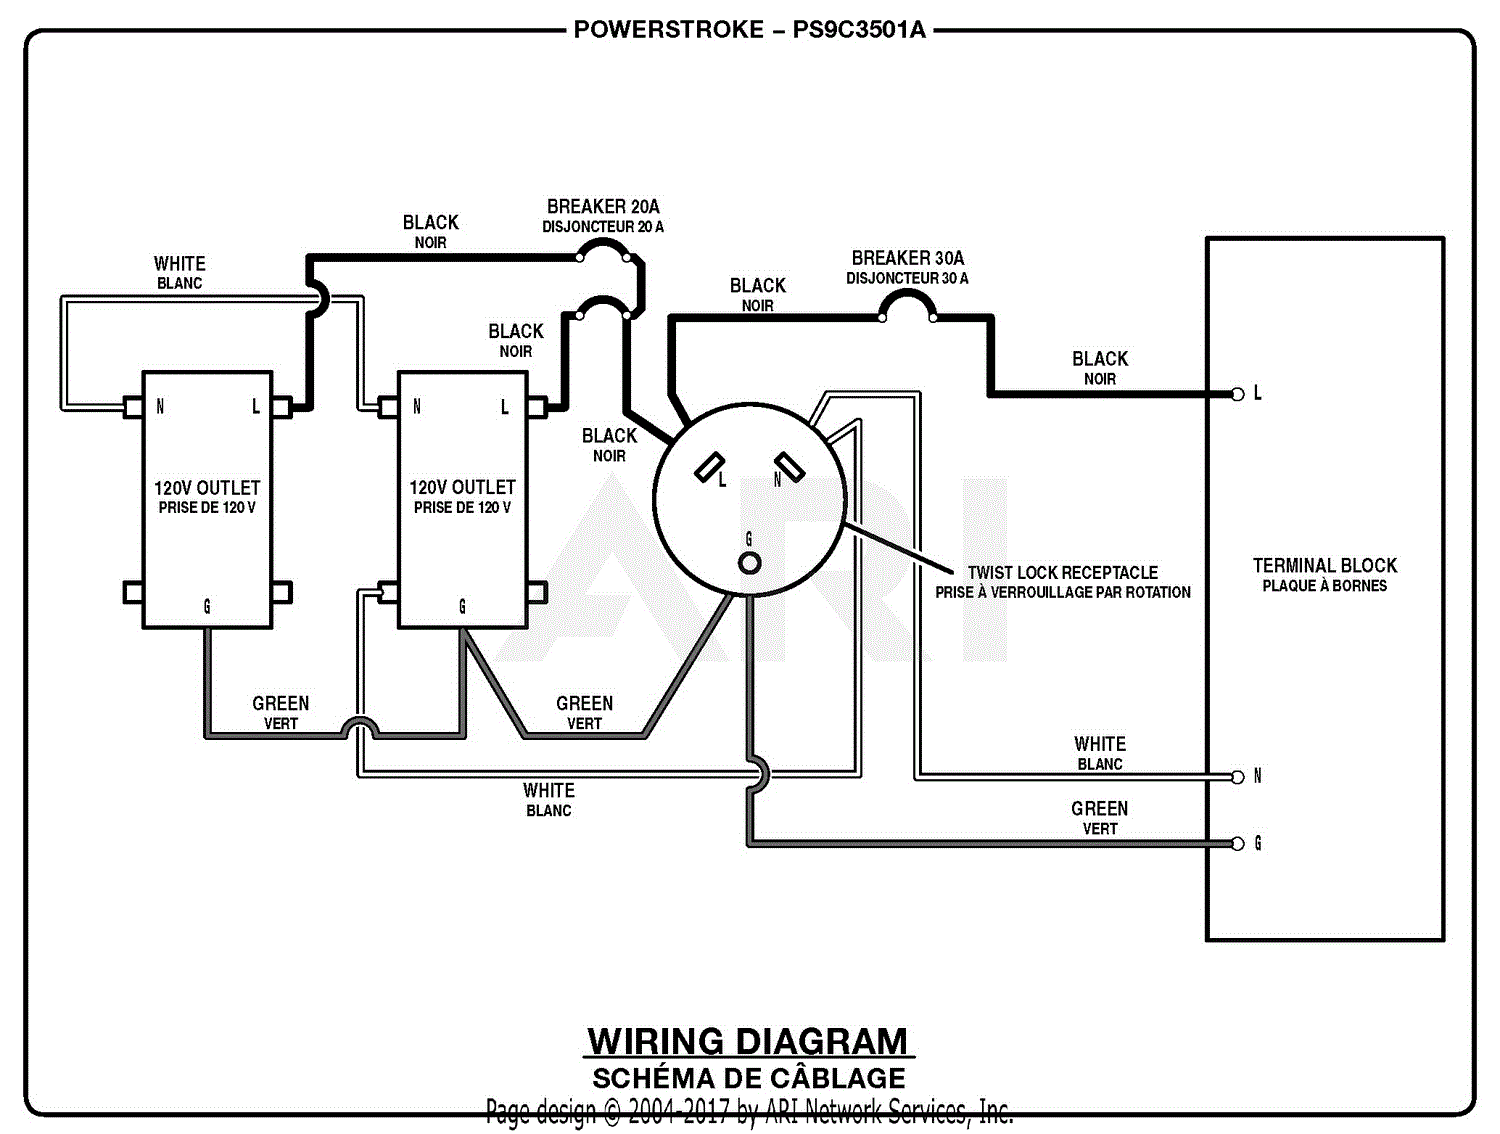 ch740-3347 wiring diagram kohler